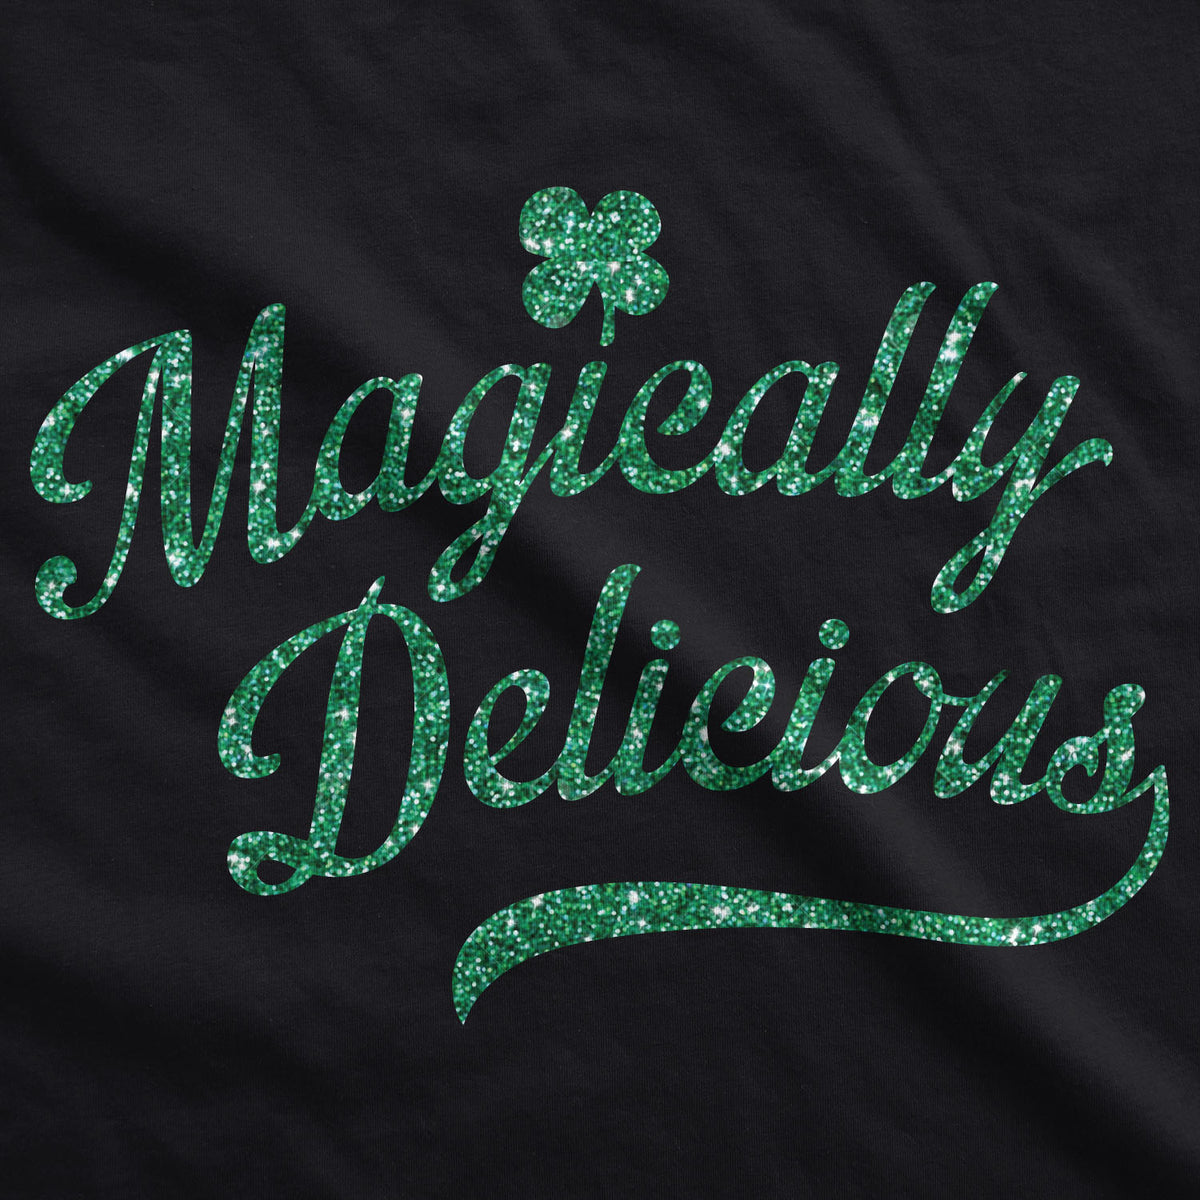 Magically Delicious Glitter Women&#39;s T Shirt